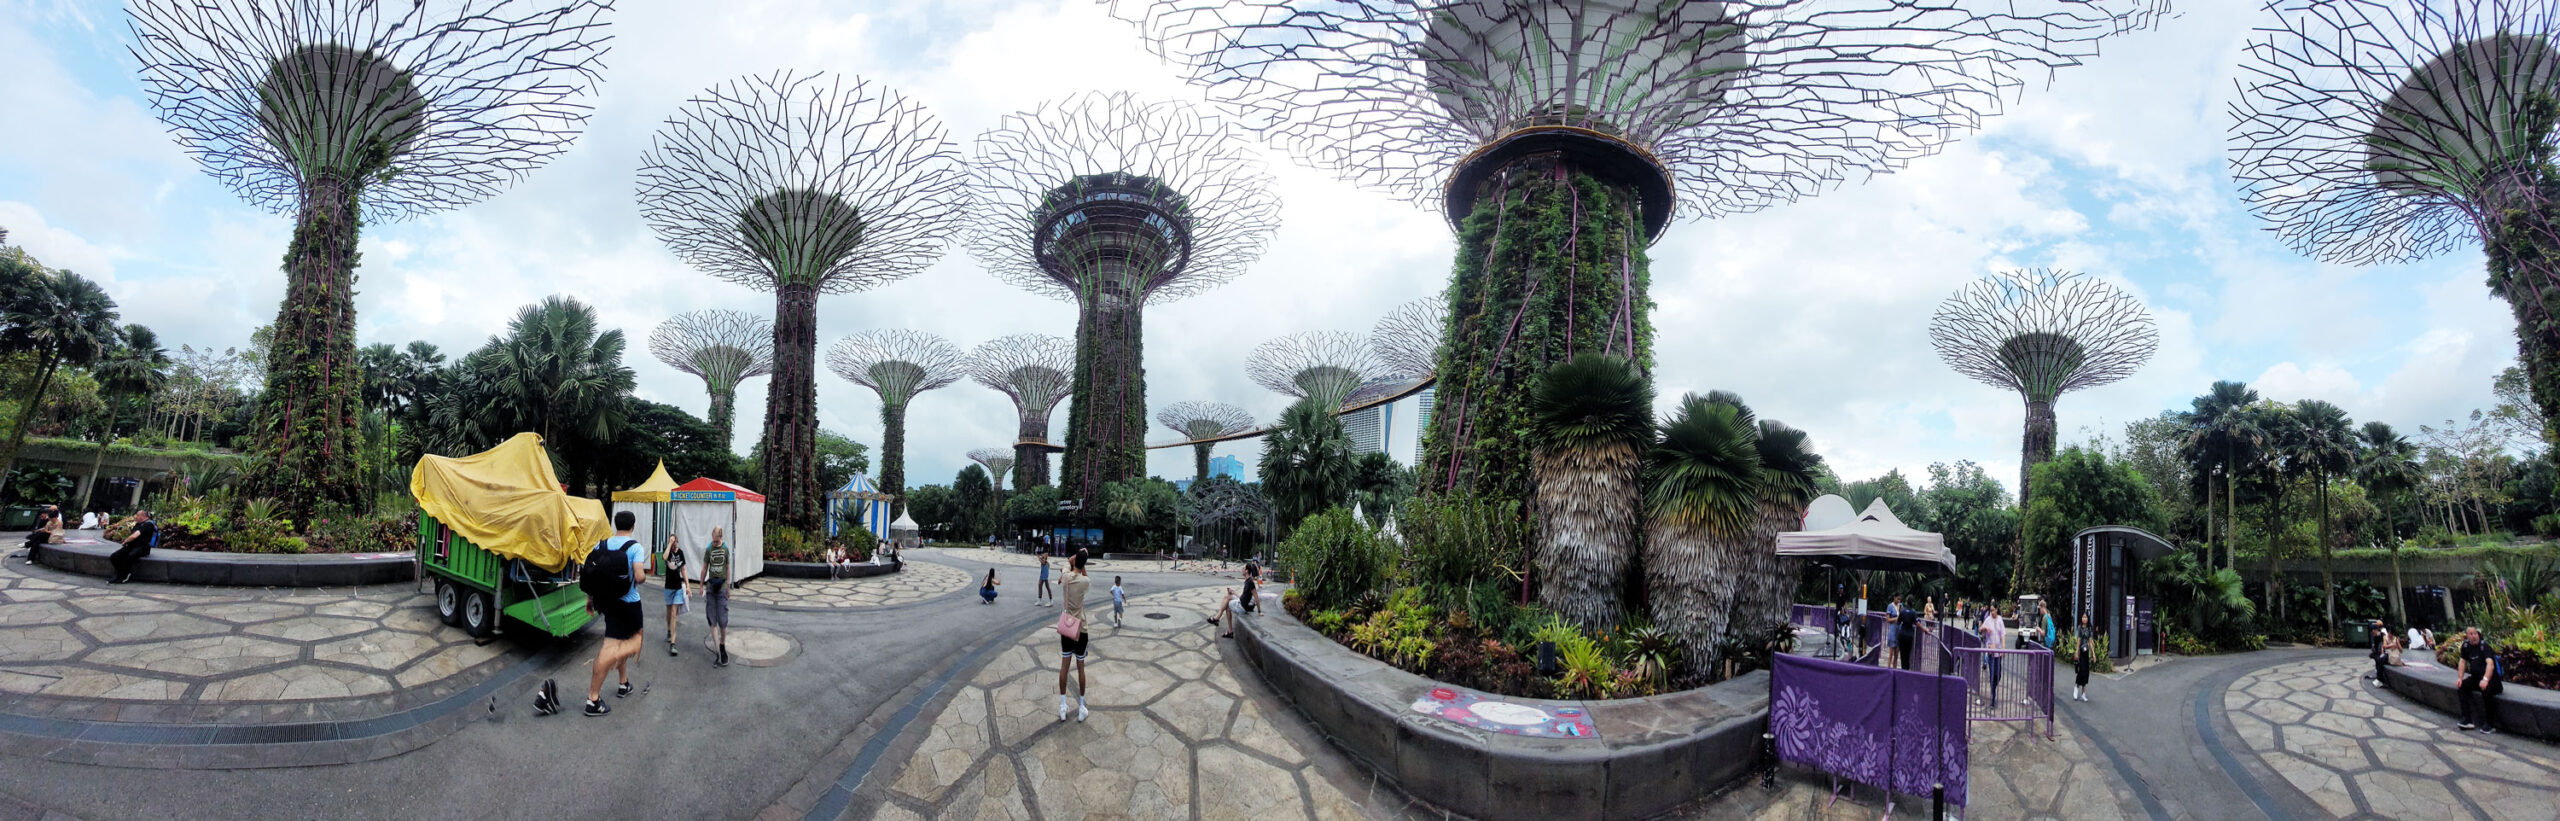 Panoramaansicht "Supertree Grove" - FemNews.de - City-Check Singapur